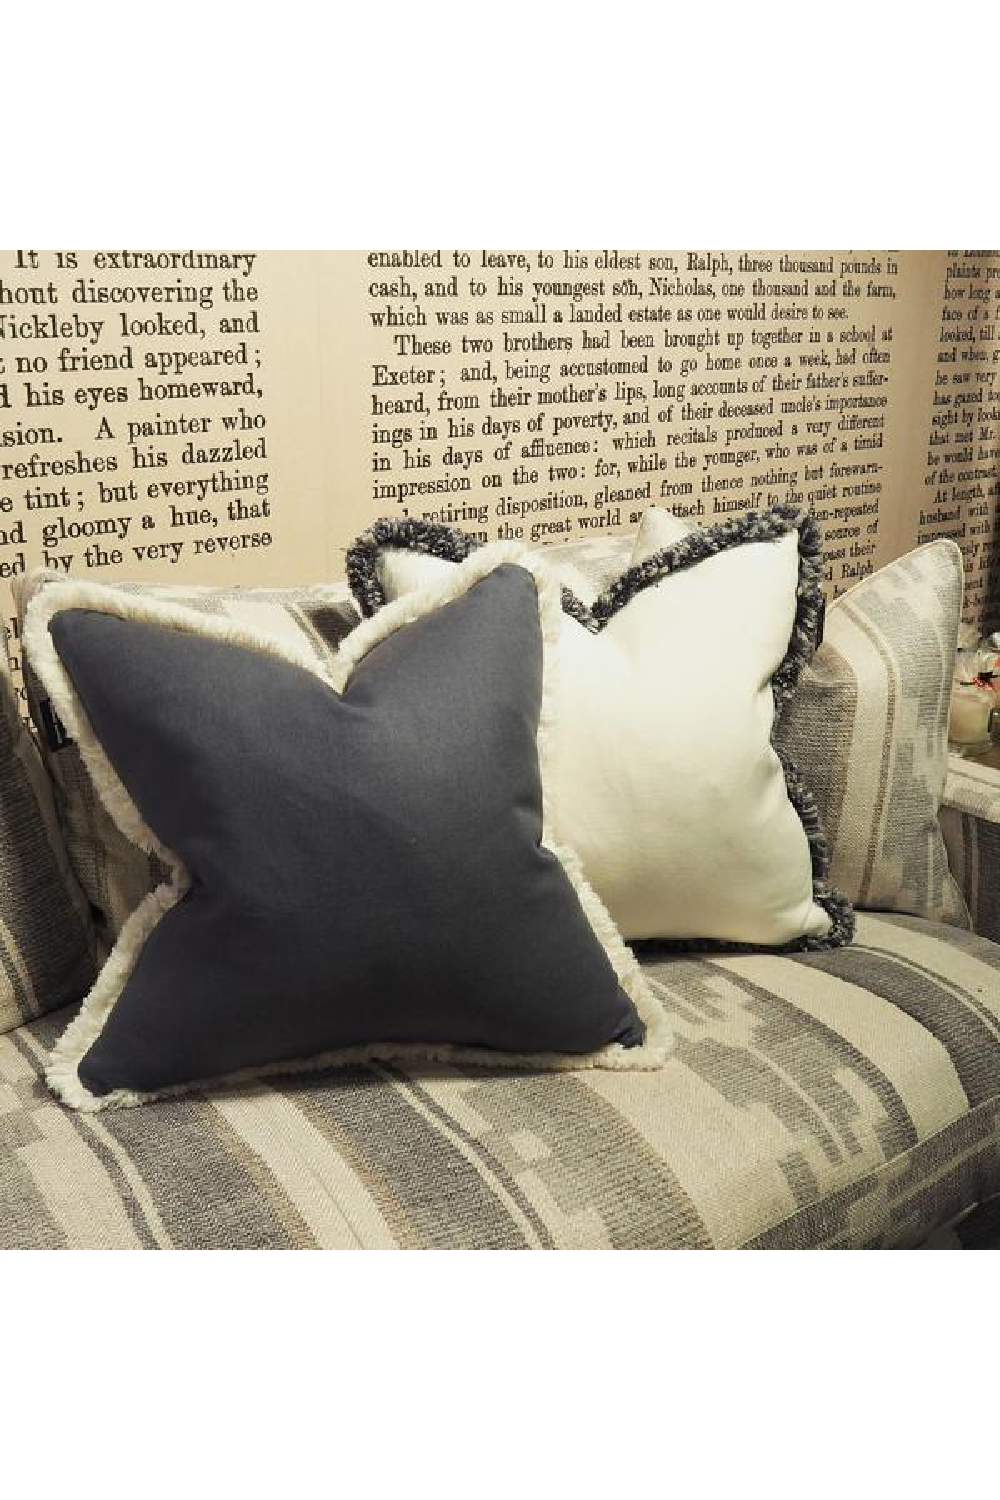 Fringed Linen Cushion | Andrew Martin Beagle | OROA 